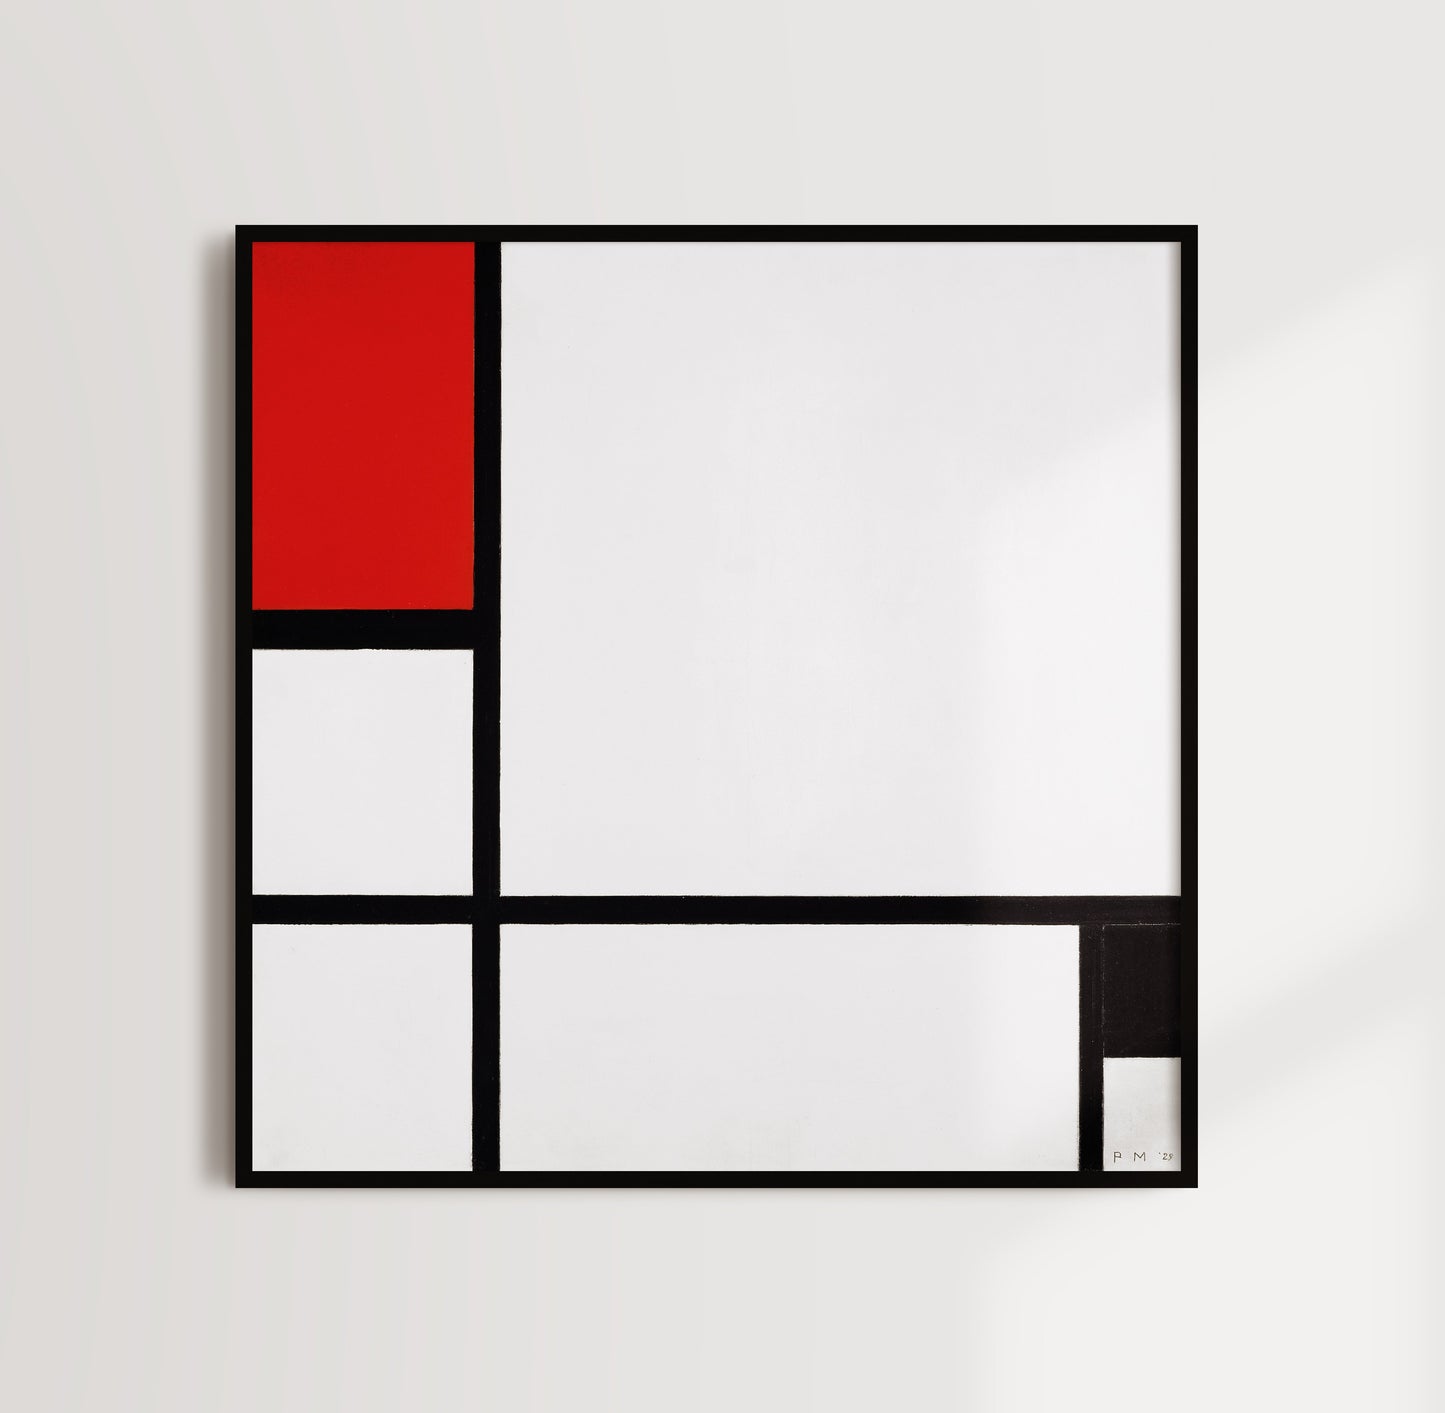 Composition No.1 by Piet Mondrian